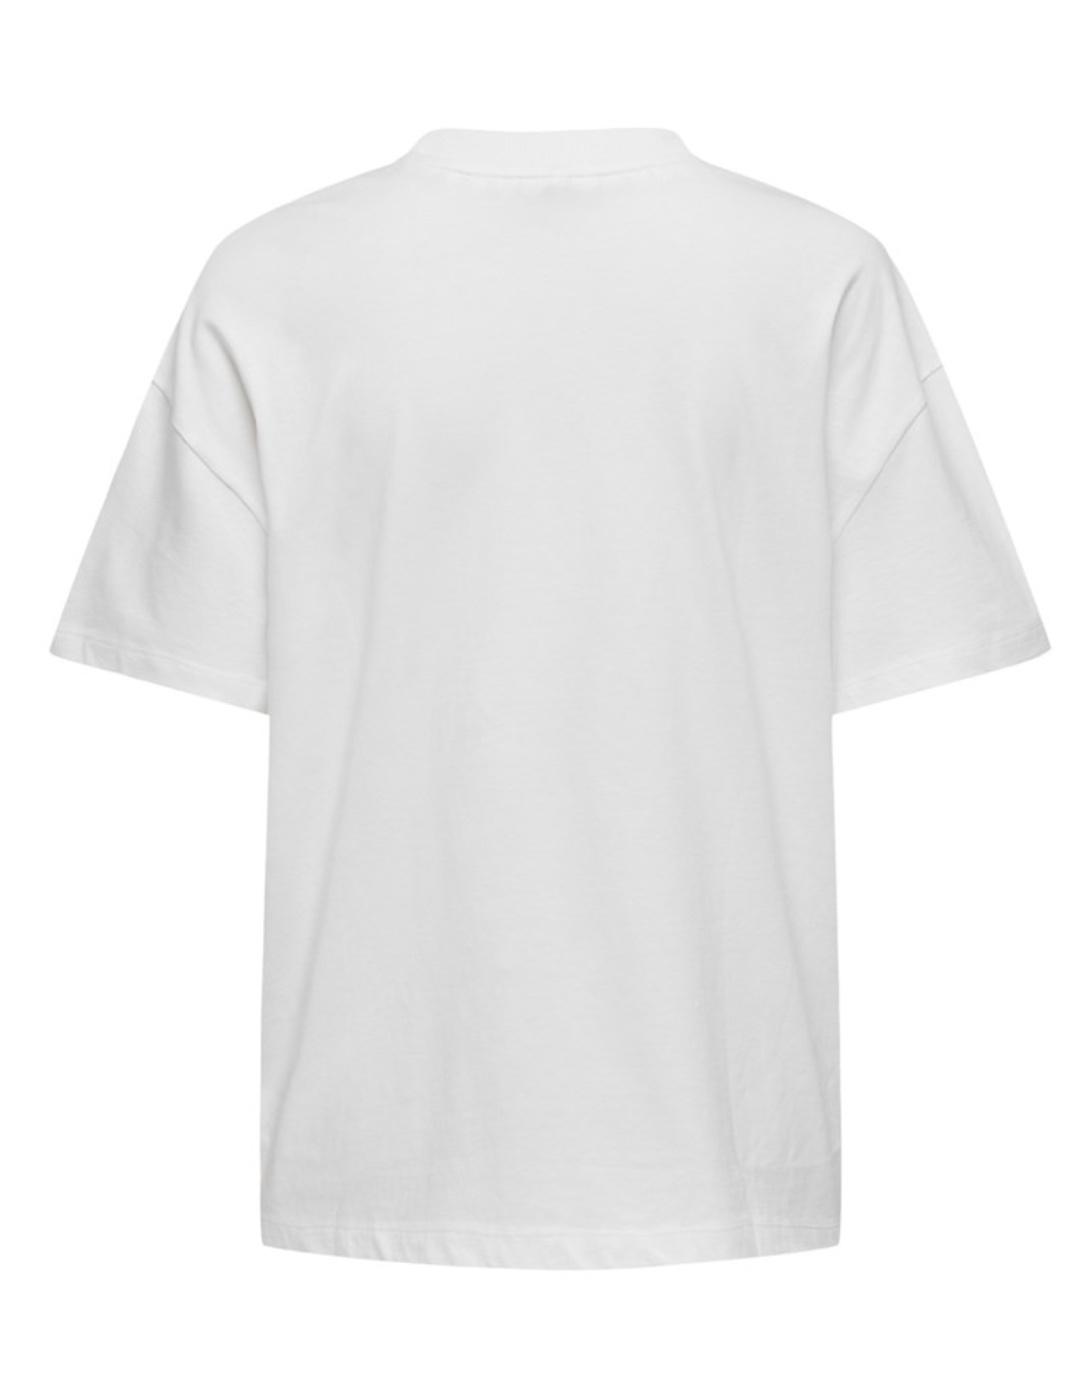 Camiseta Only Sara blanco manga corta para mujer